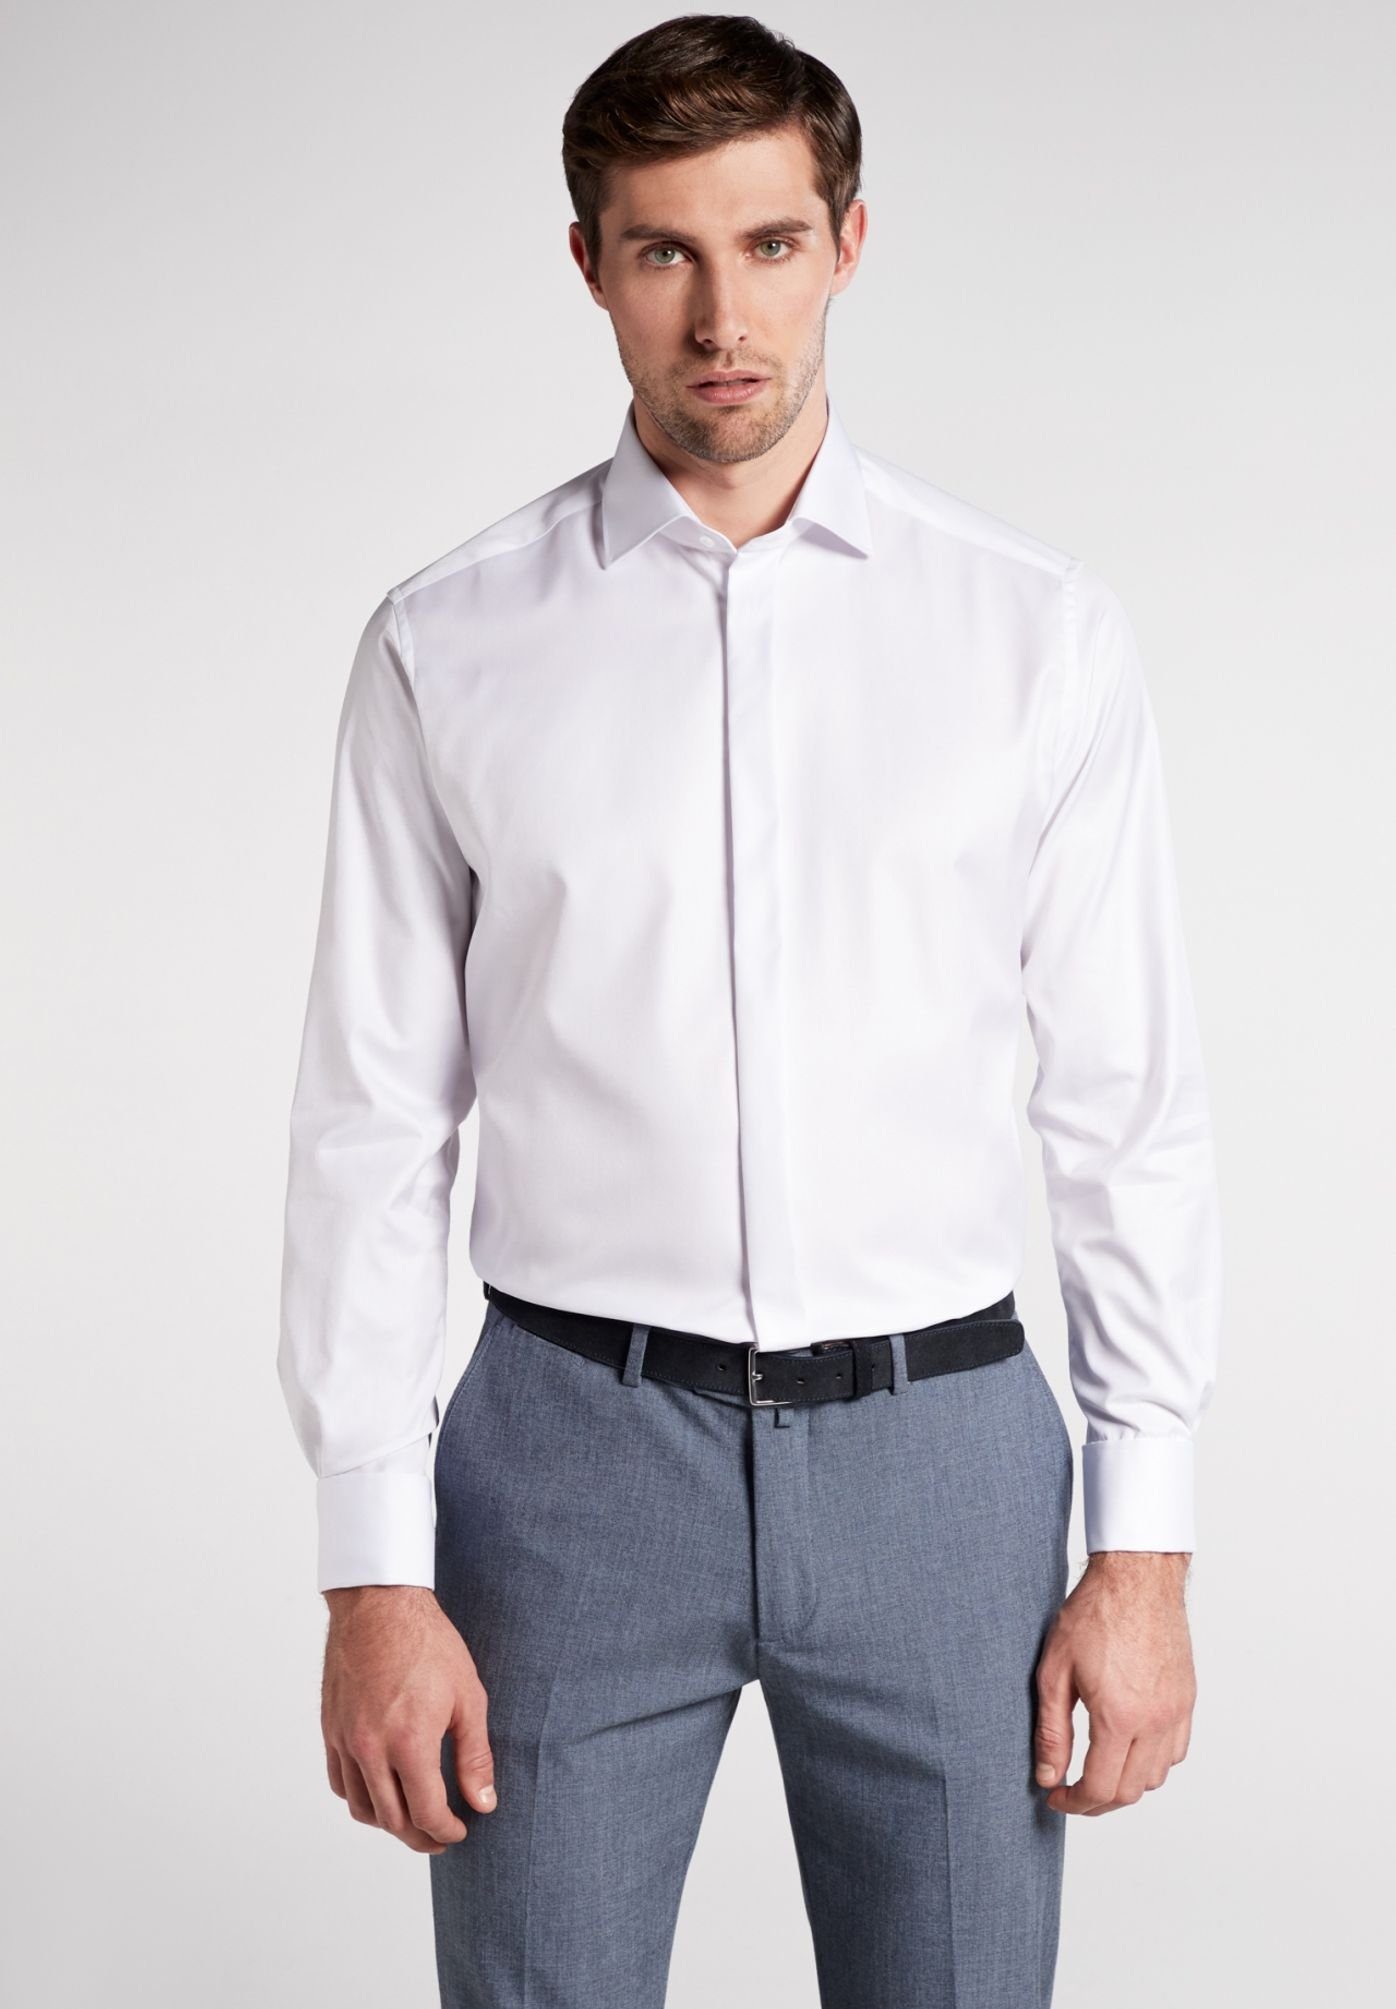 (00) Eterna Einfarbig Langarmhemd Modern Fit Weiß